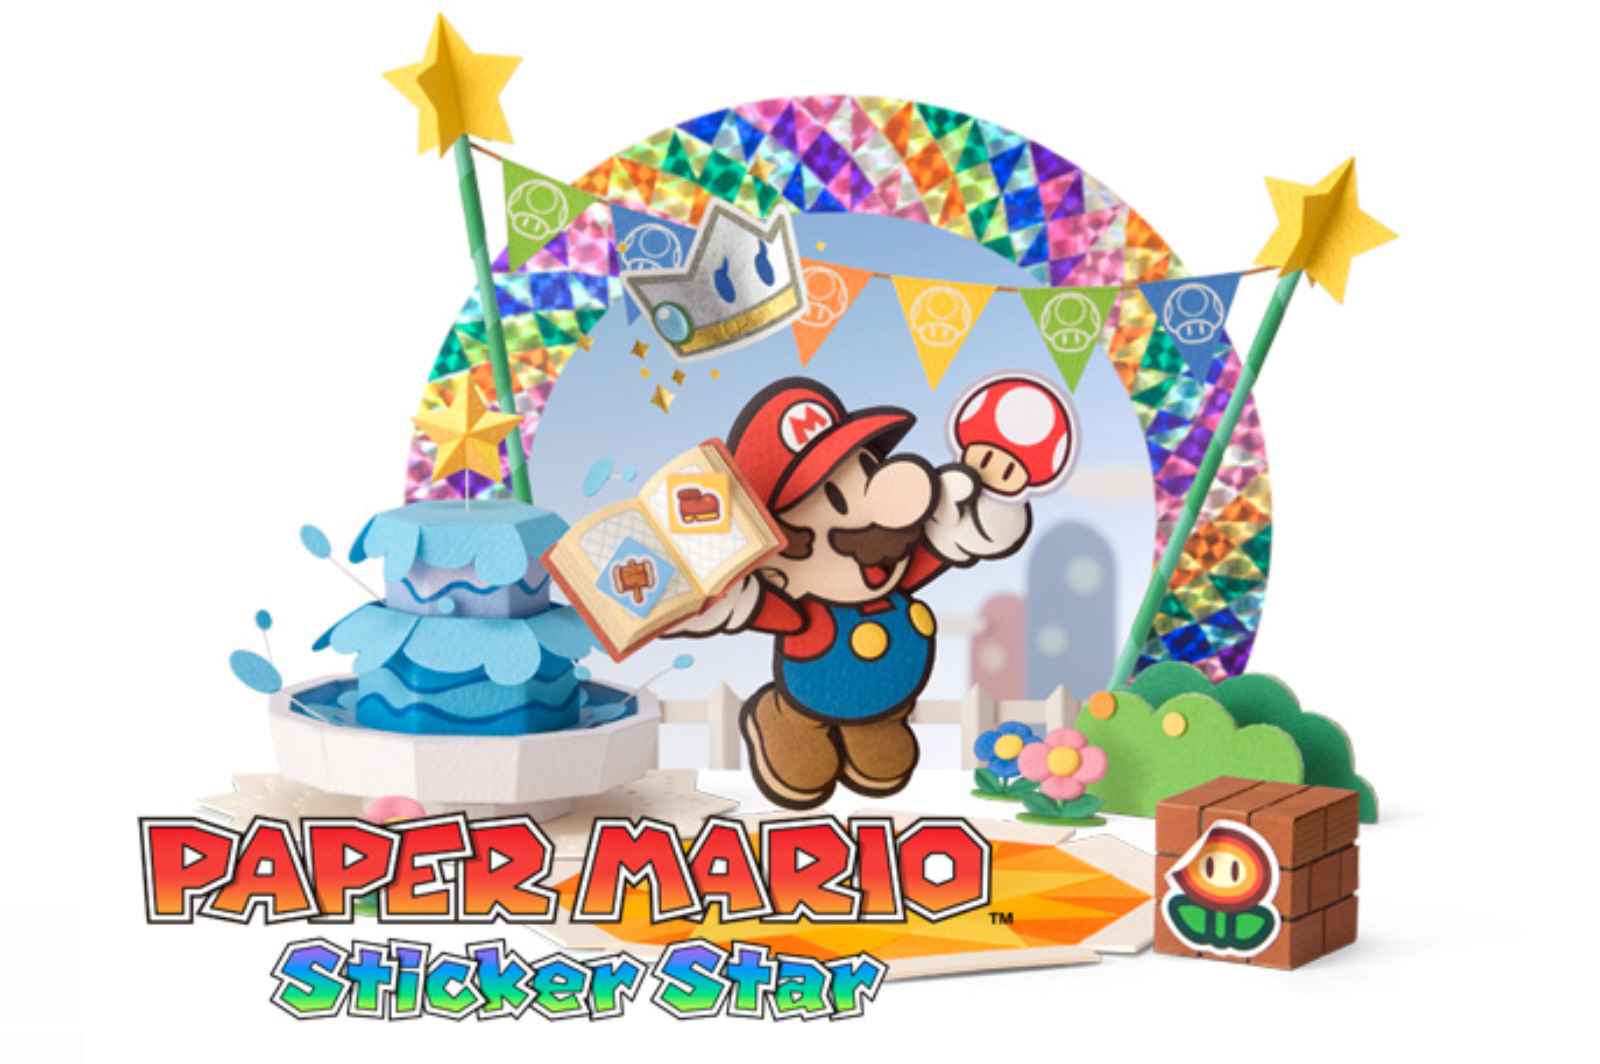 paper mario sticker star download code